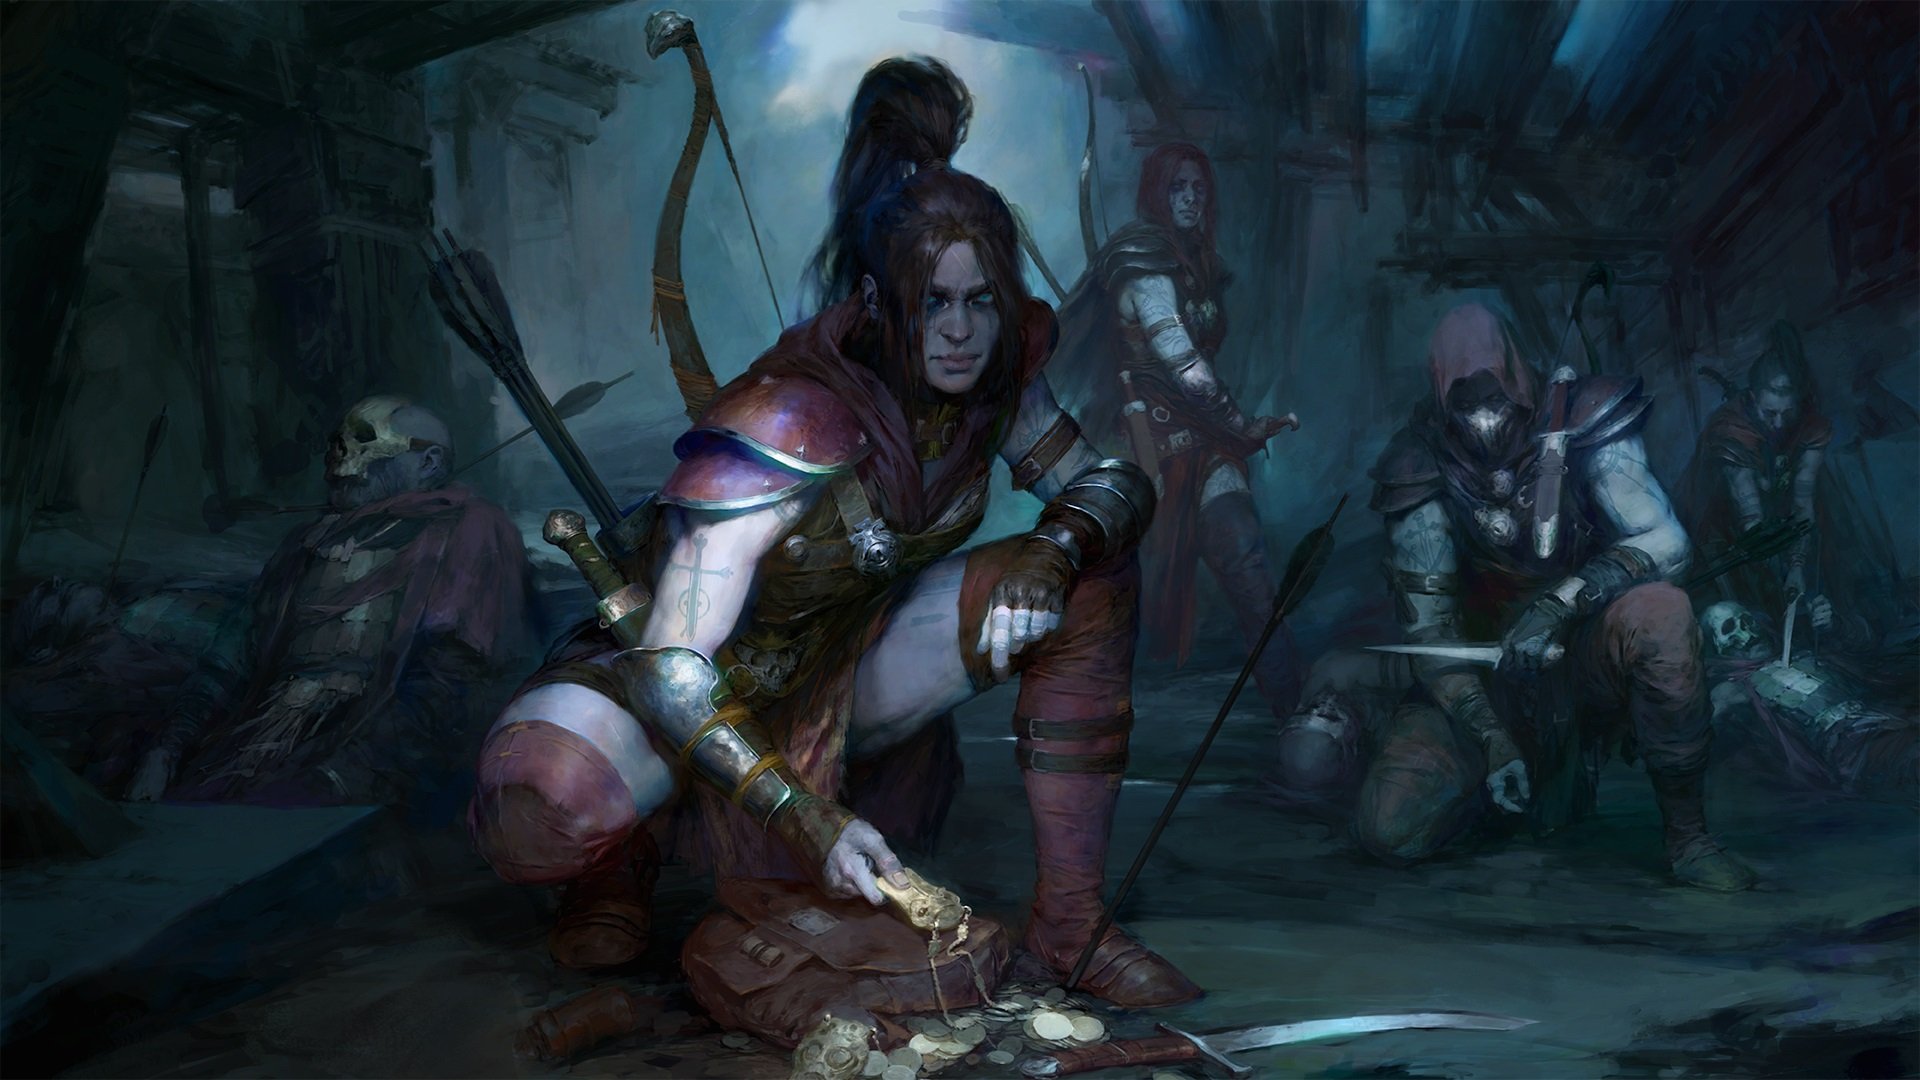 Diablo IV Beta Has Been Added To The Battle.net Launcher